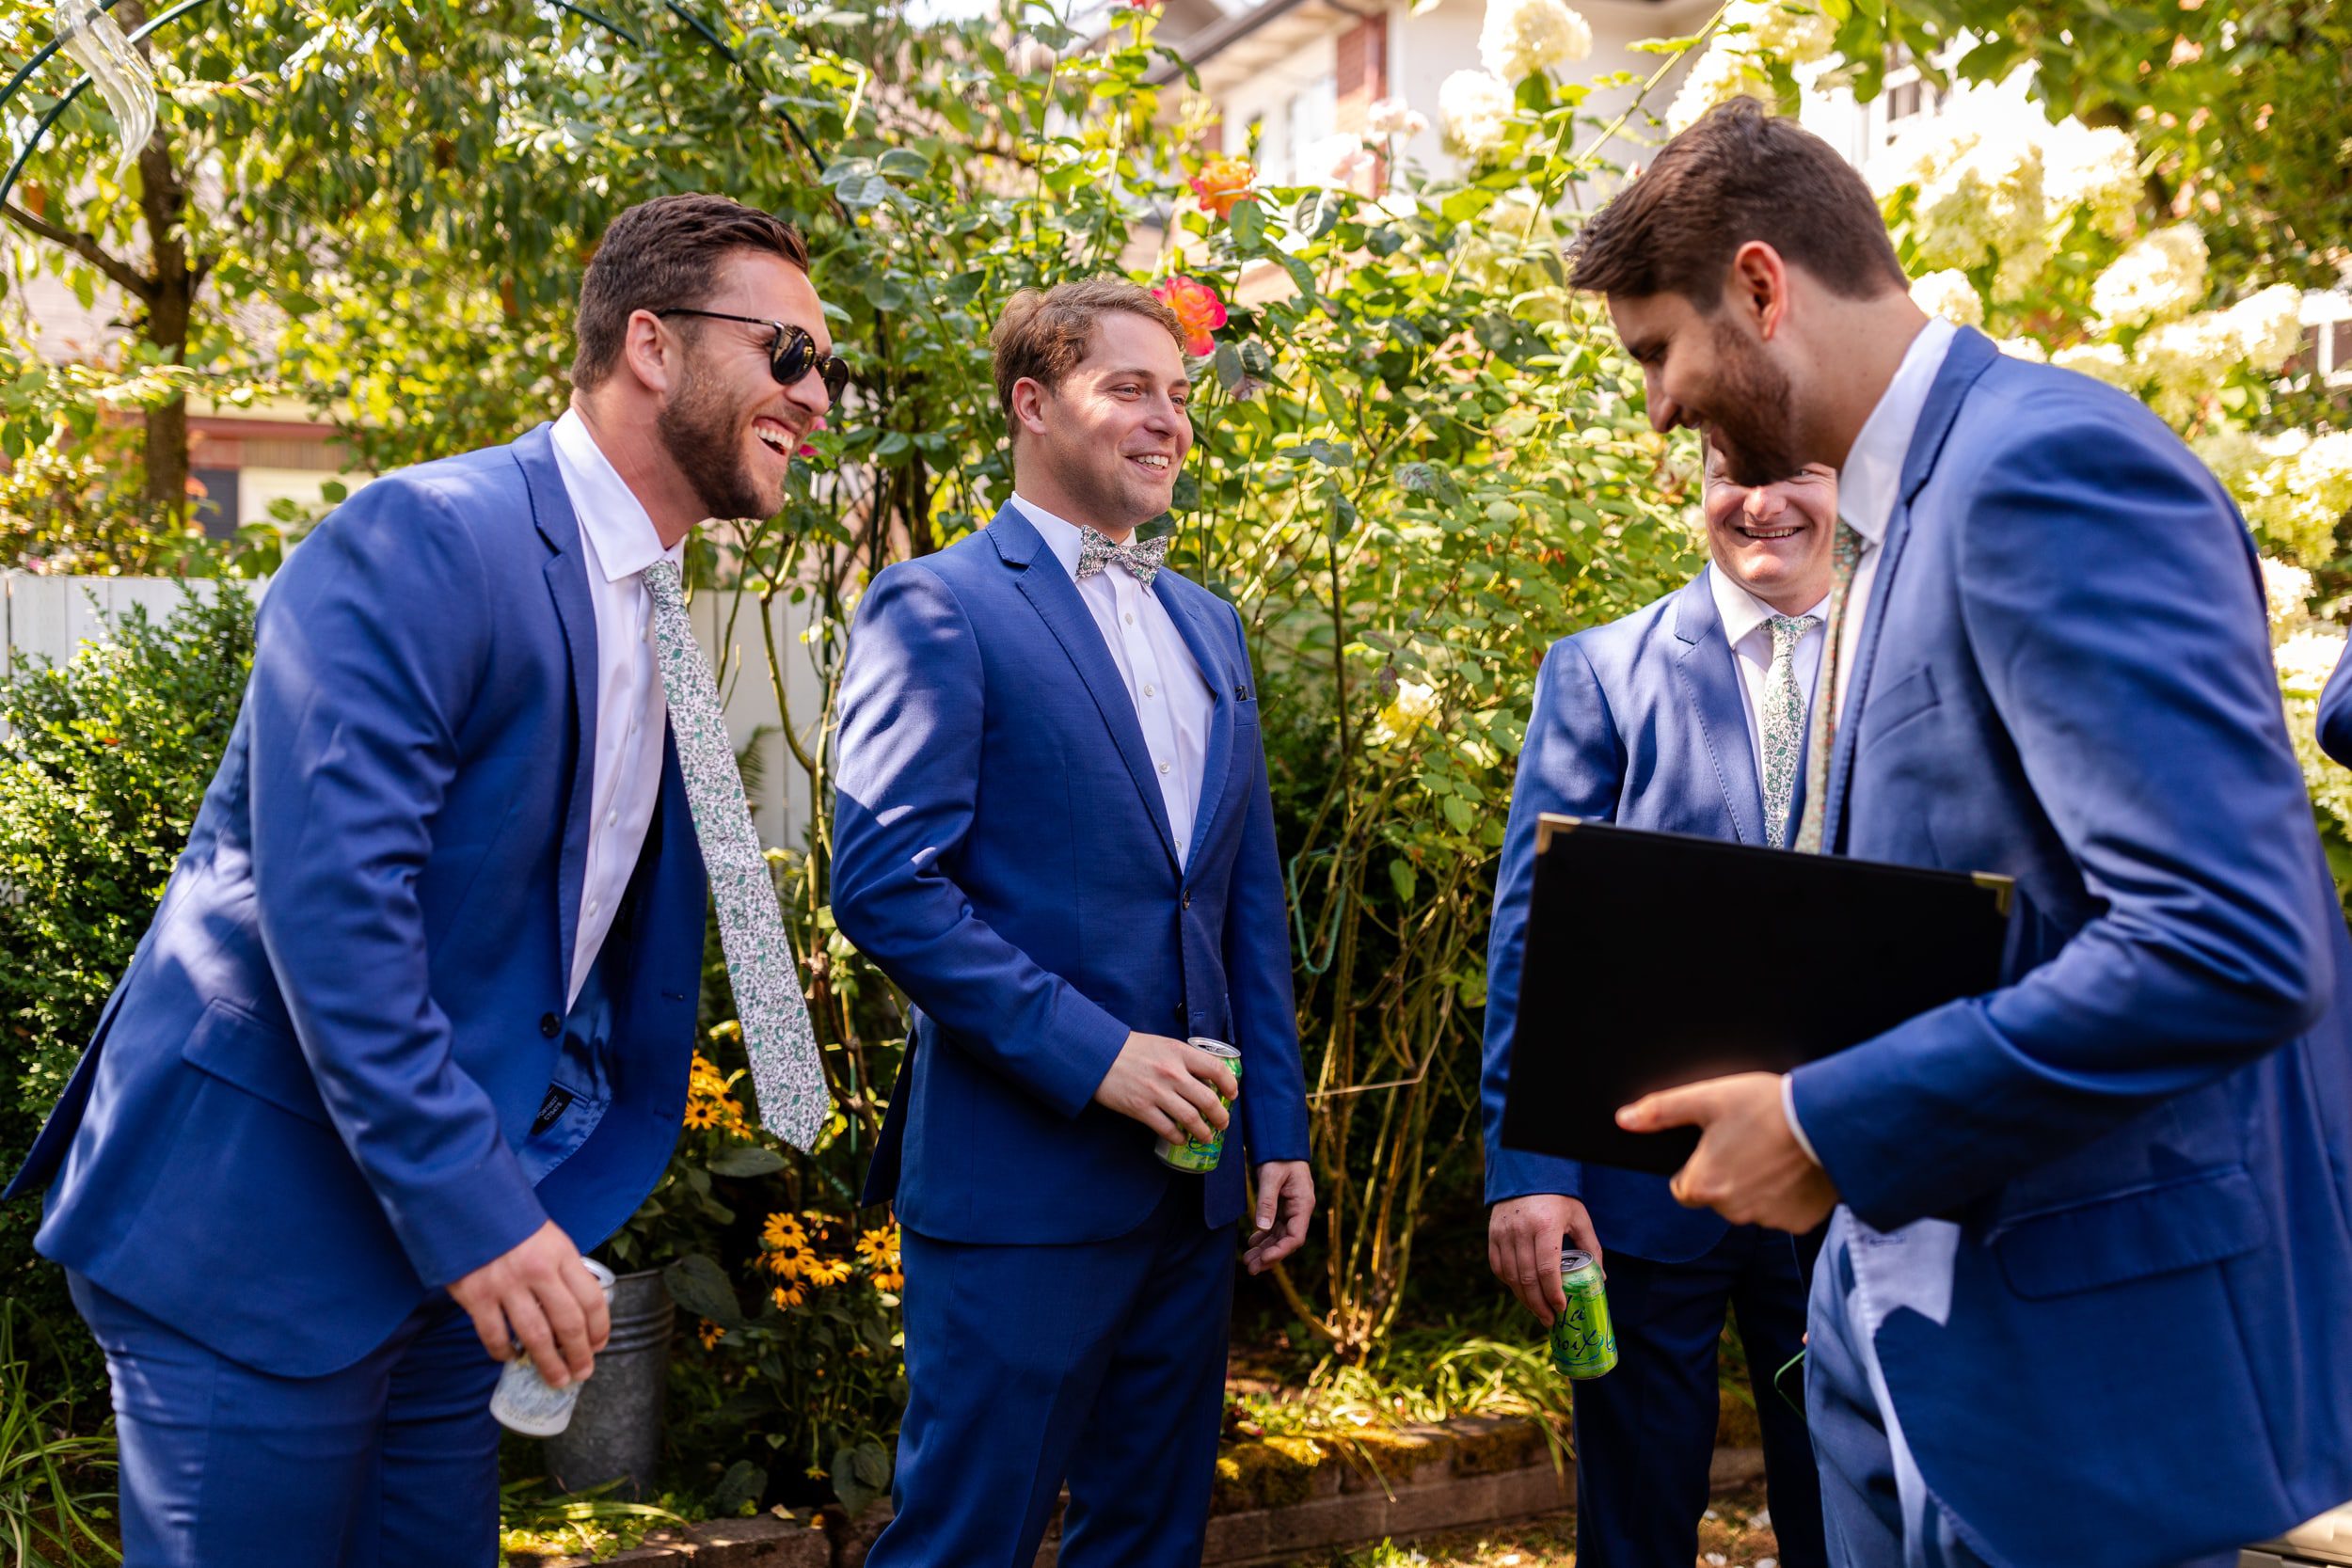 candid groomsmen photos, hanging out with groomsmen ahead of wedding, wedding getting ready, blue suit groomsmen